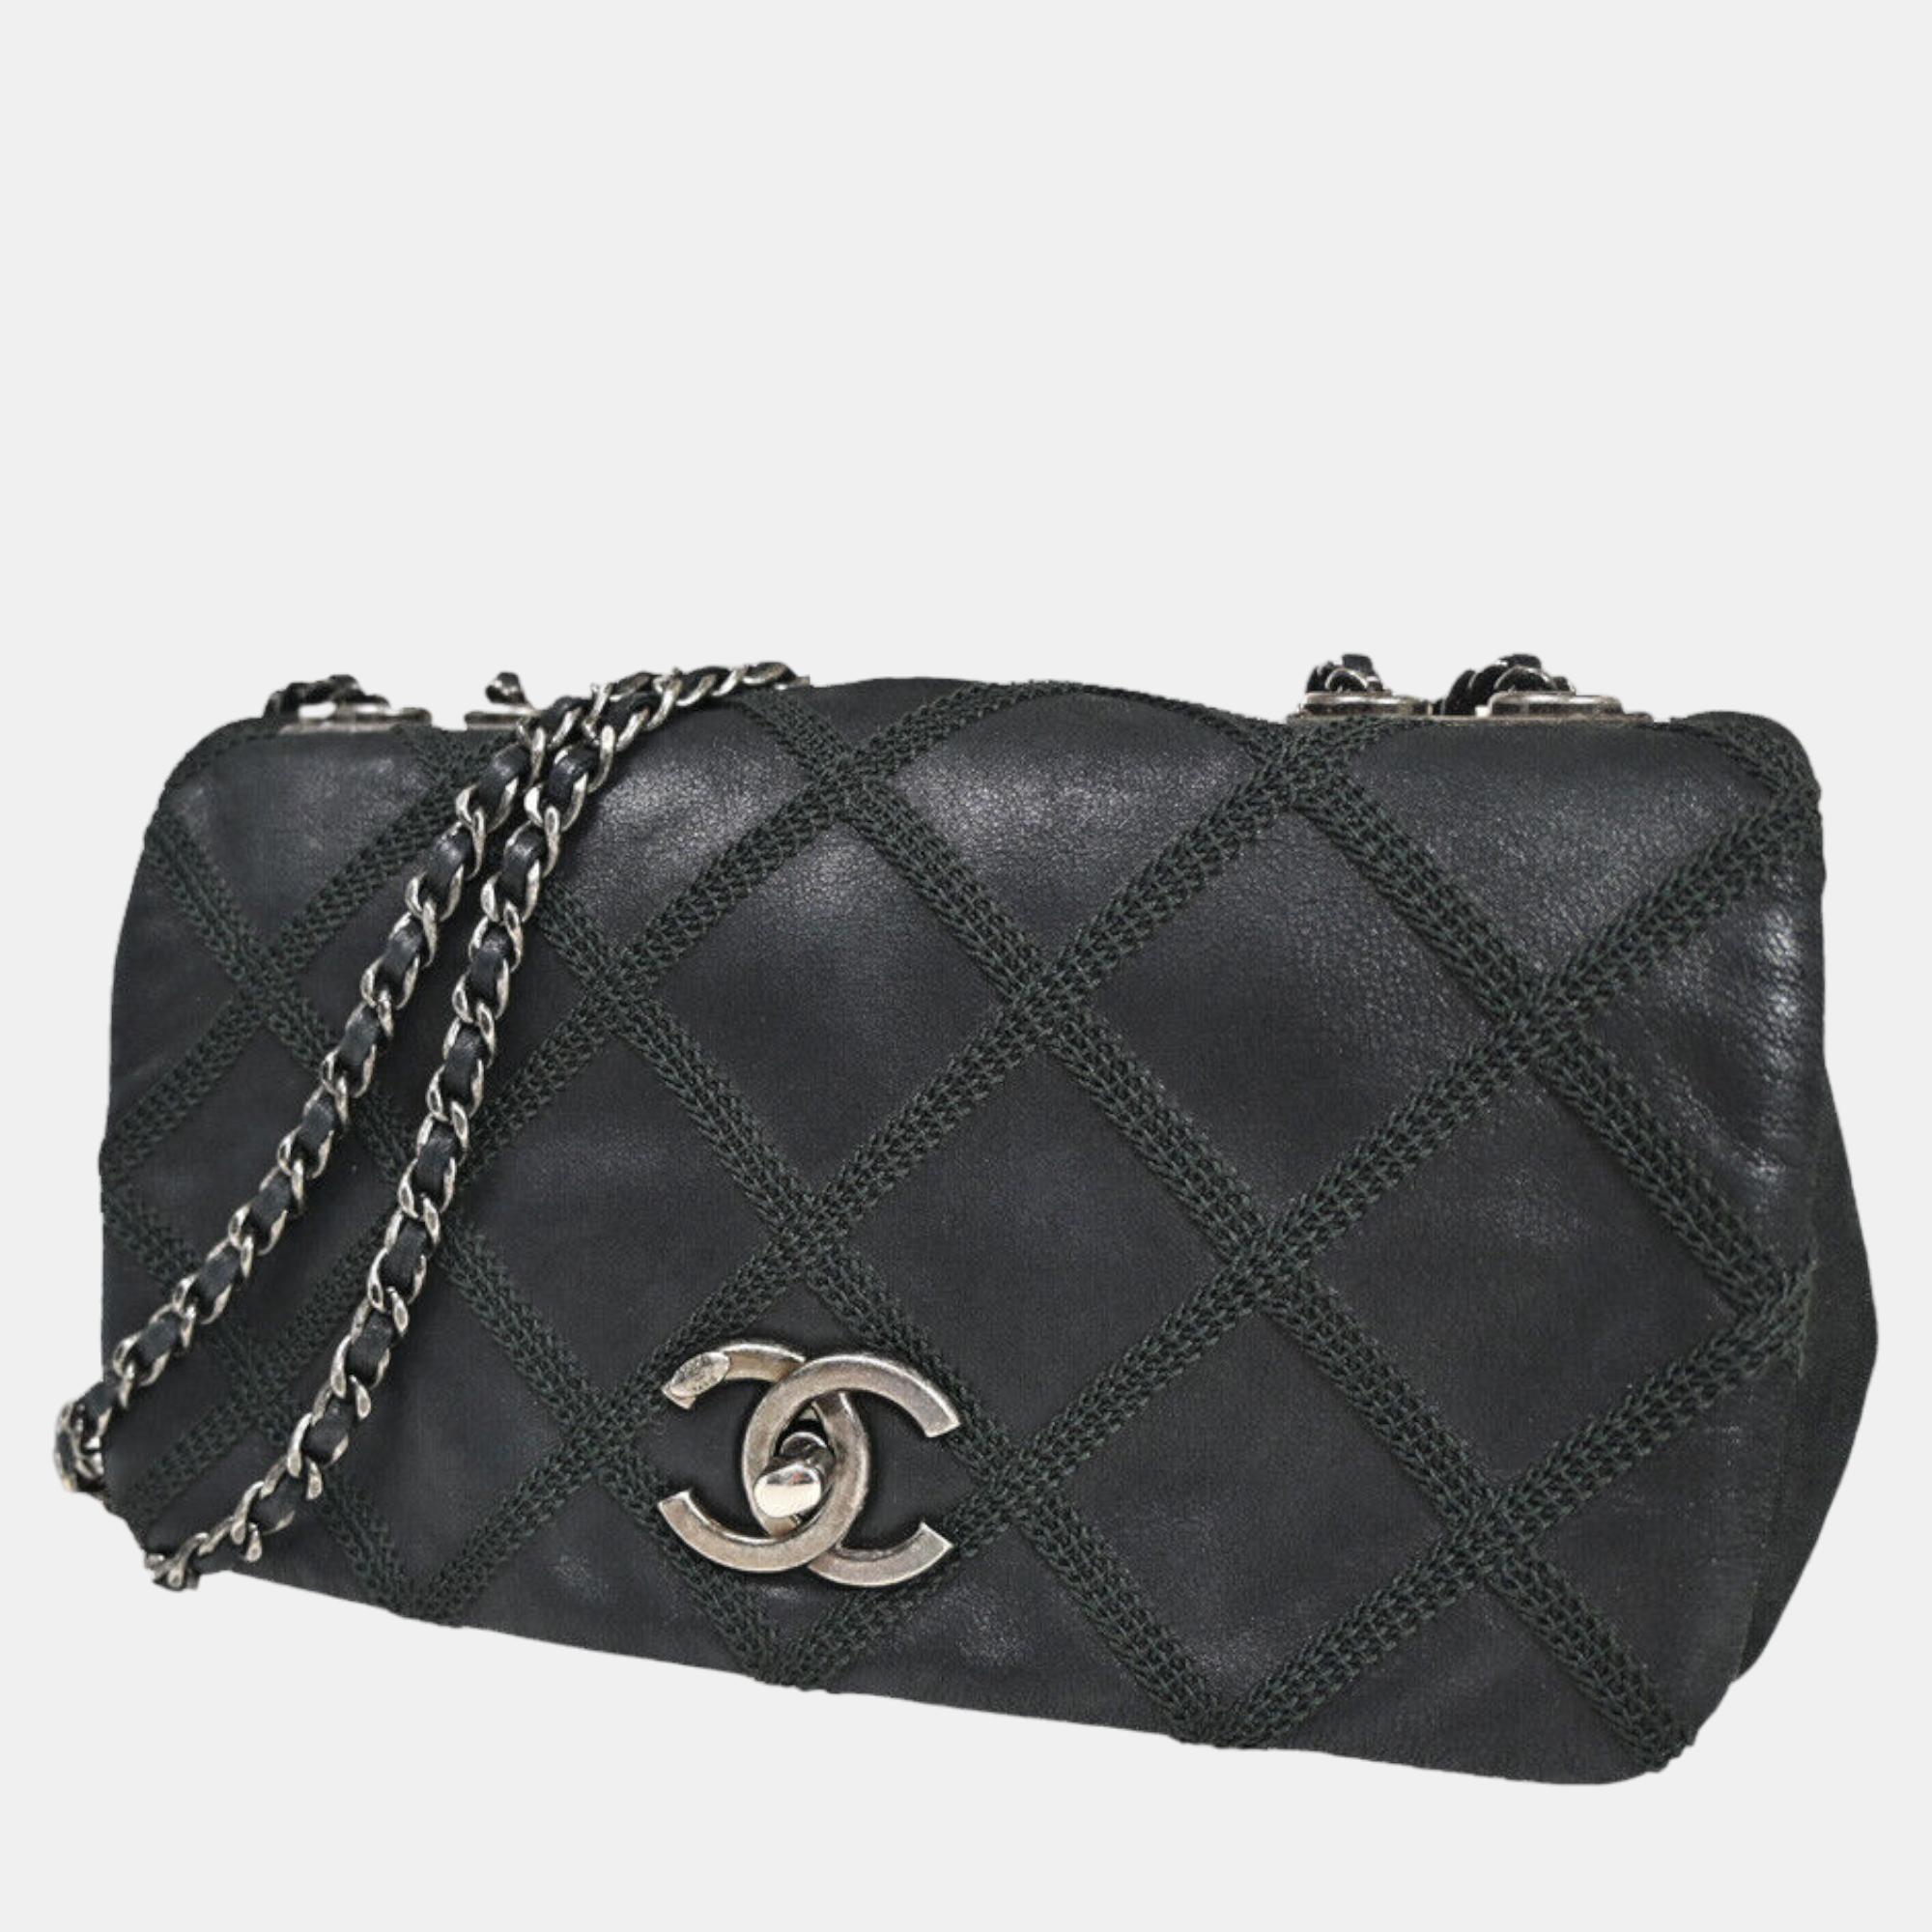 Chanel black diamond embossed calfskin small new chic flap bag